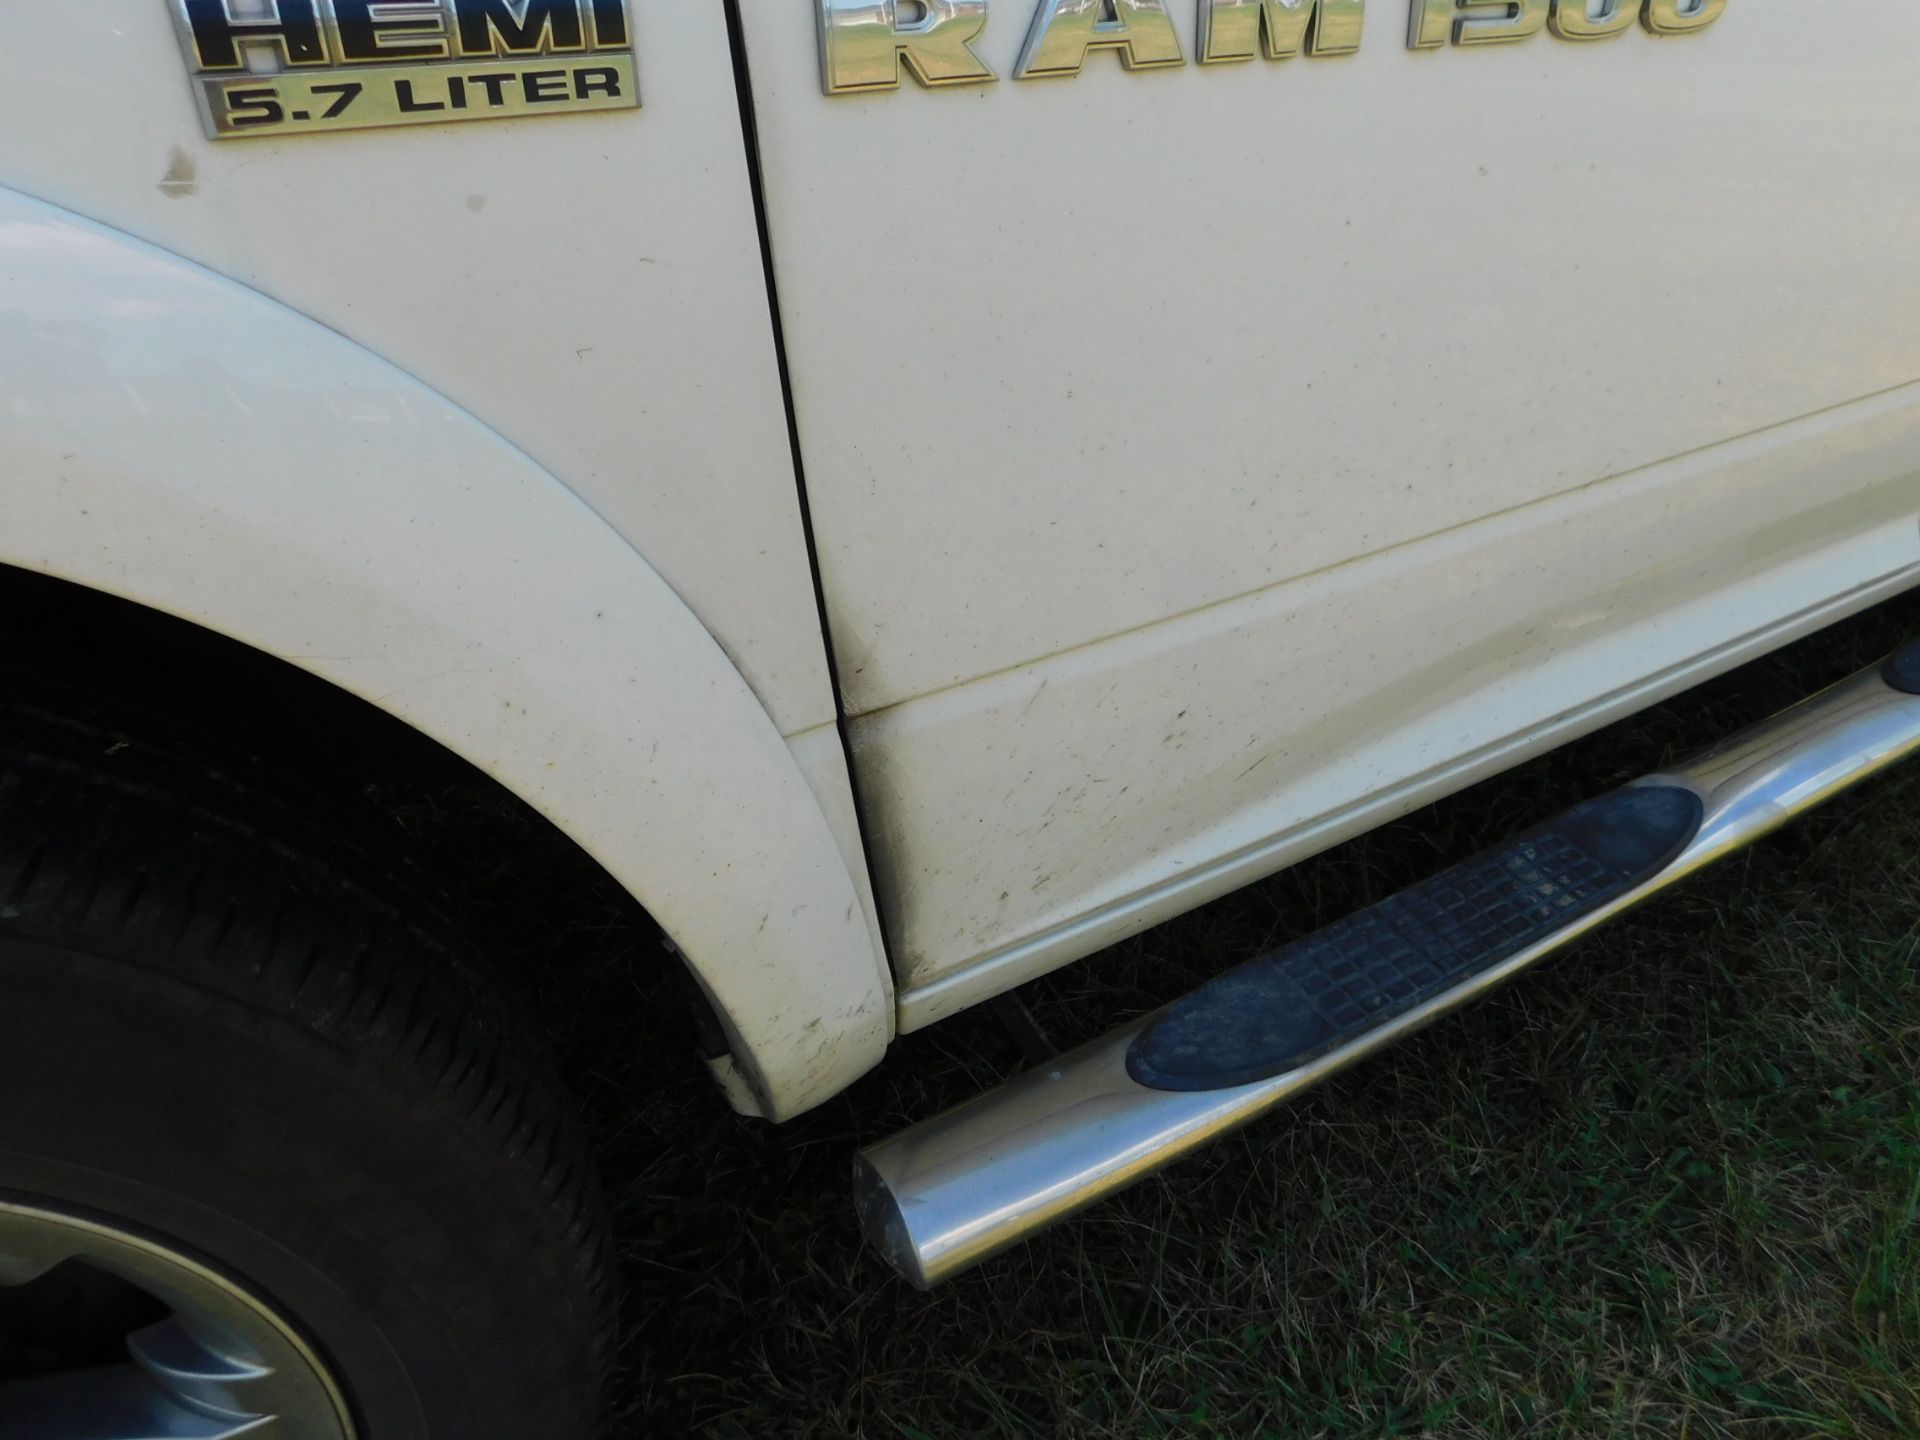 2012 Dodge Ram 1500 Pickup, Crew Cab, 6' Bed, Automatic, 4 WD, AM/FM,AC, PL, PW, Hemi 5.7 L - Image 19 of 53